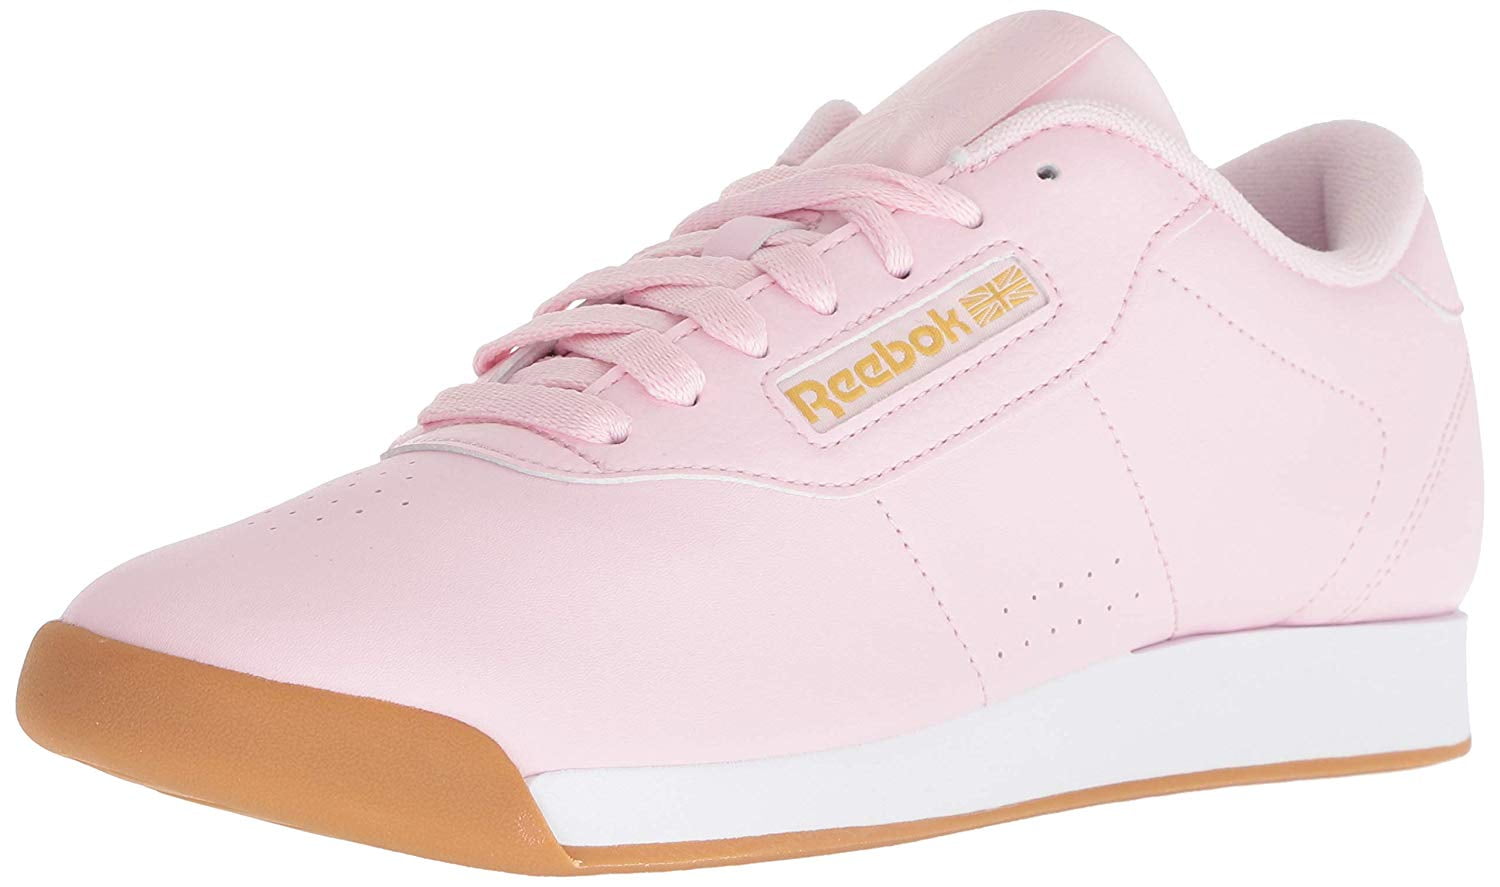 Reebok Women's Princess Sneakers BS7755 